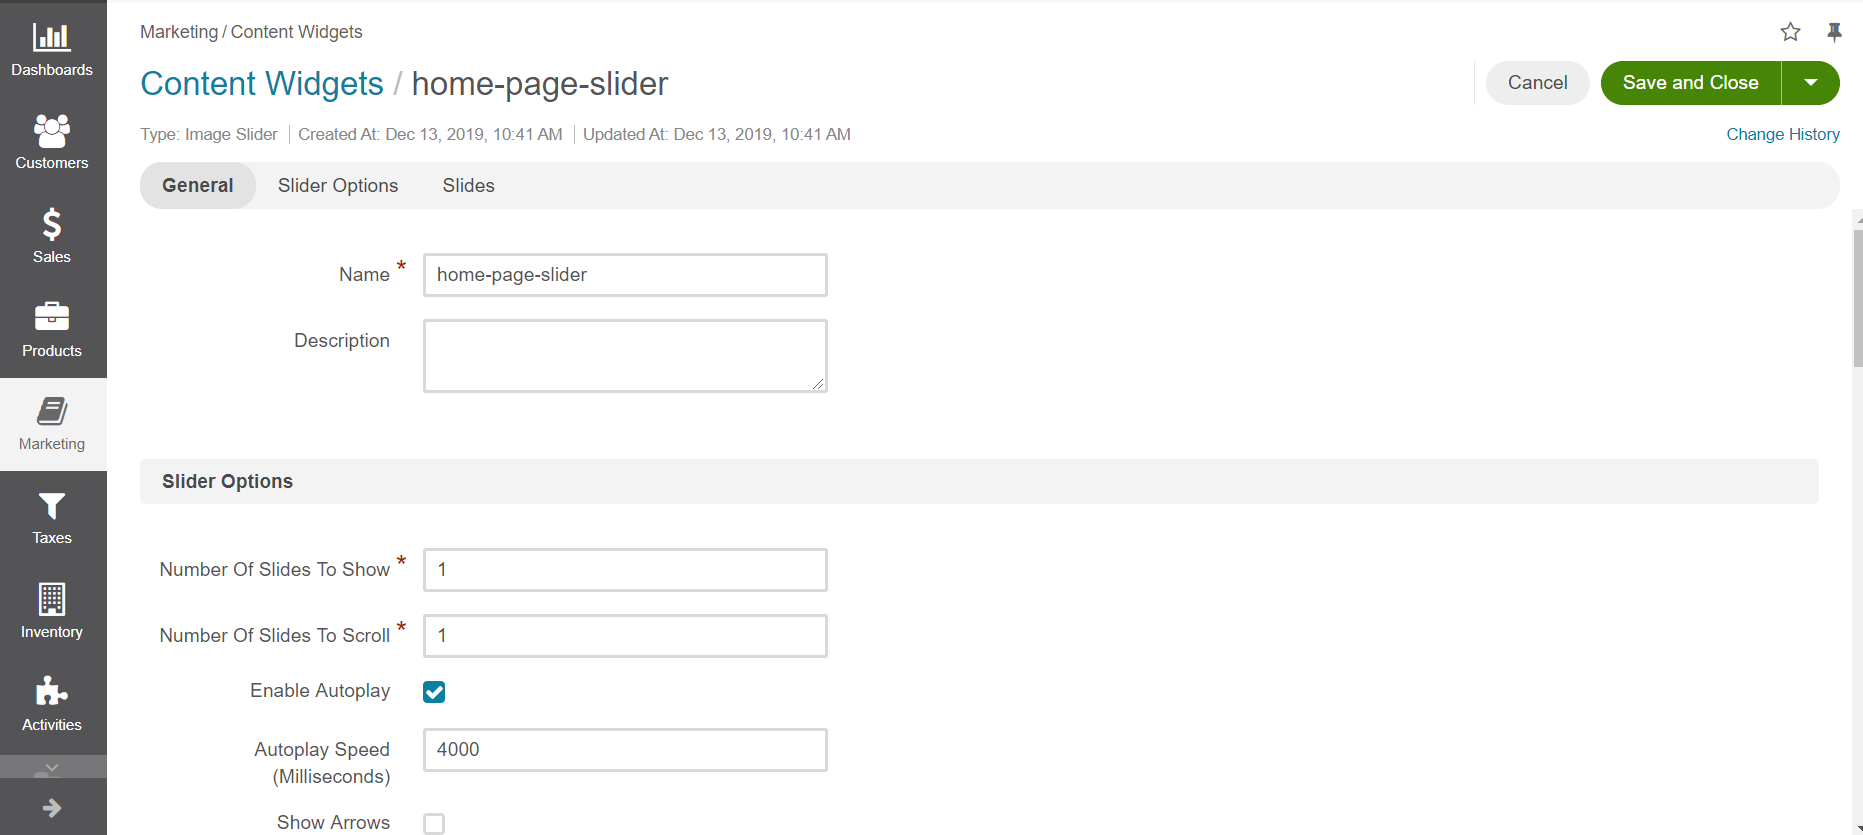 Image slider content widget form